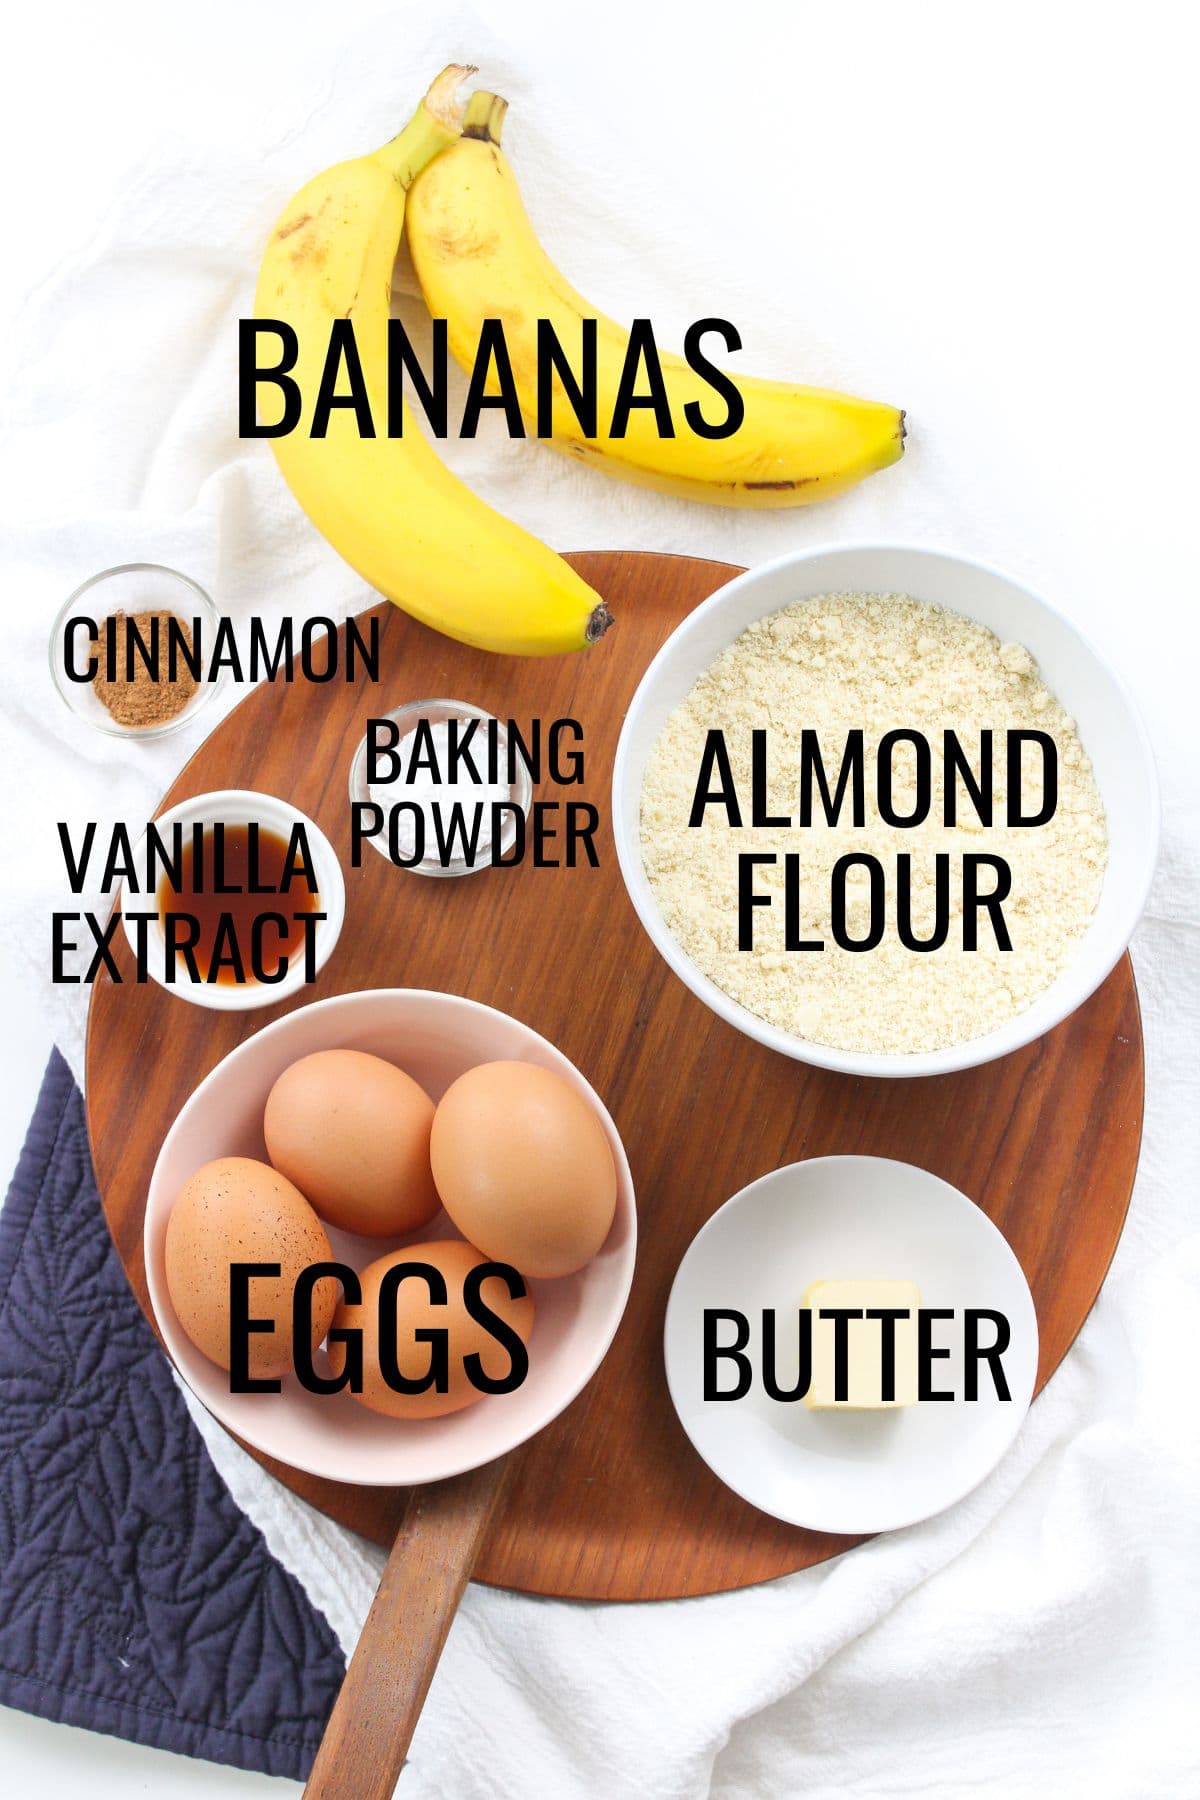 bananas, eggs, almond flour, and butter on a wooden platter